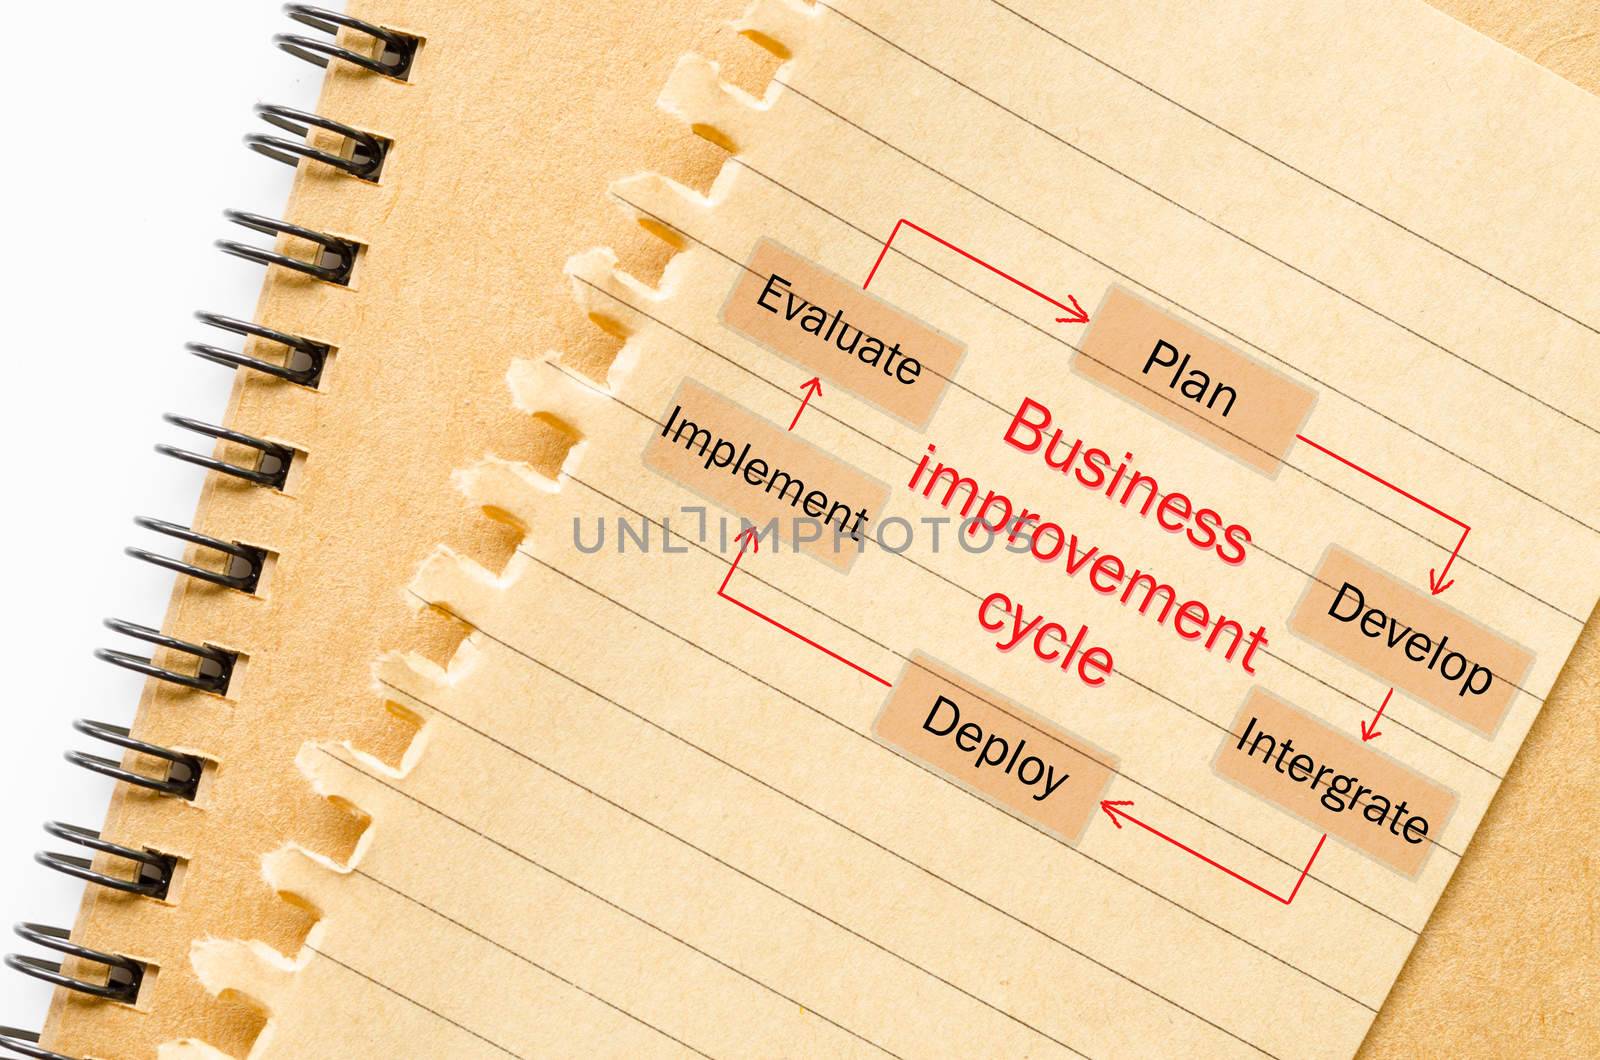 Business improvement cycle process. by Gamjai